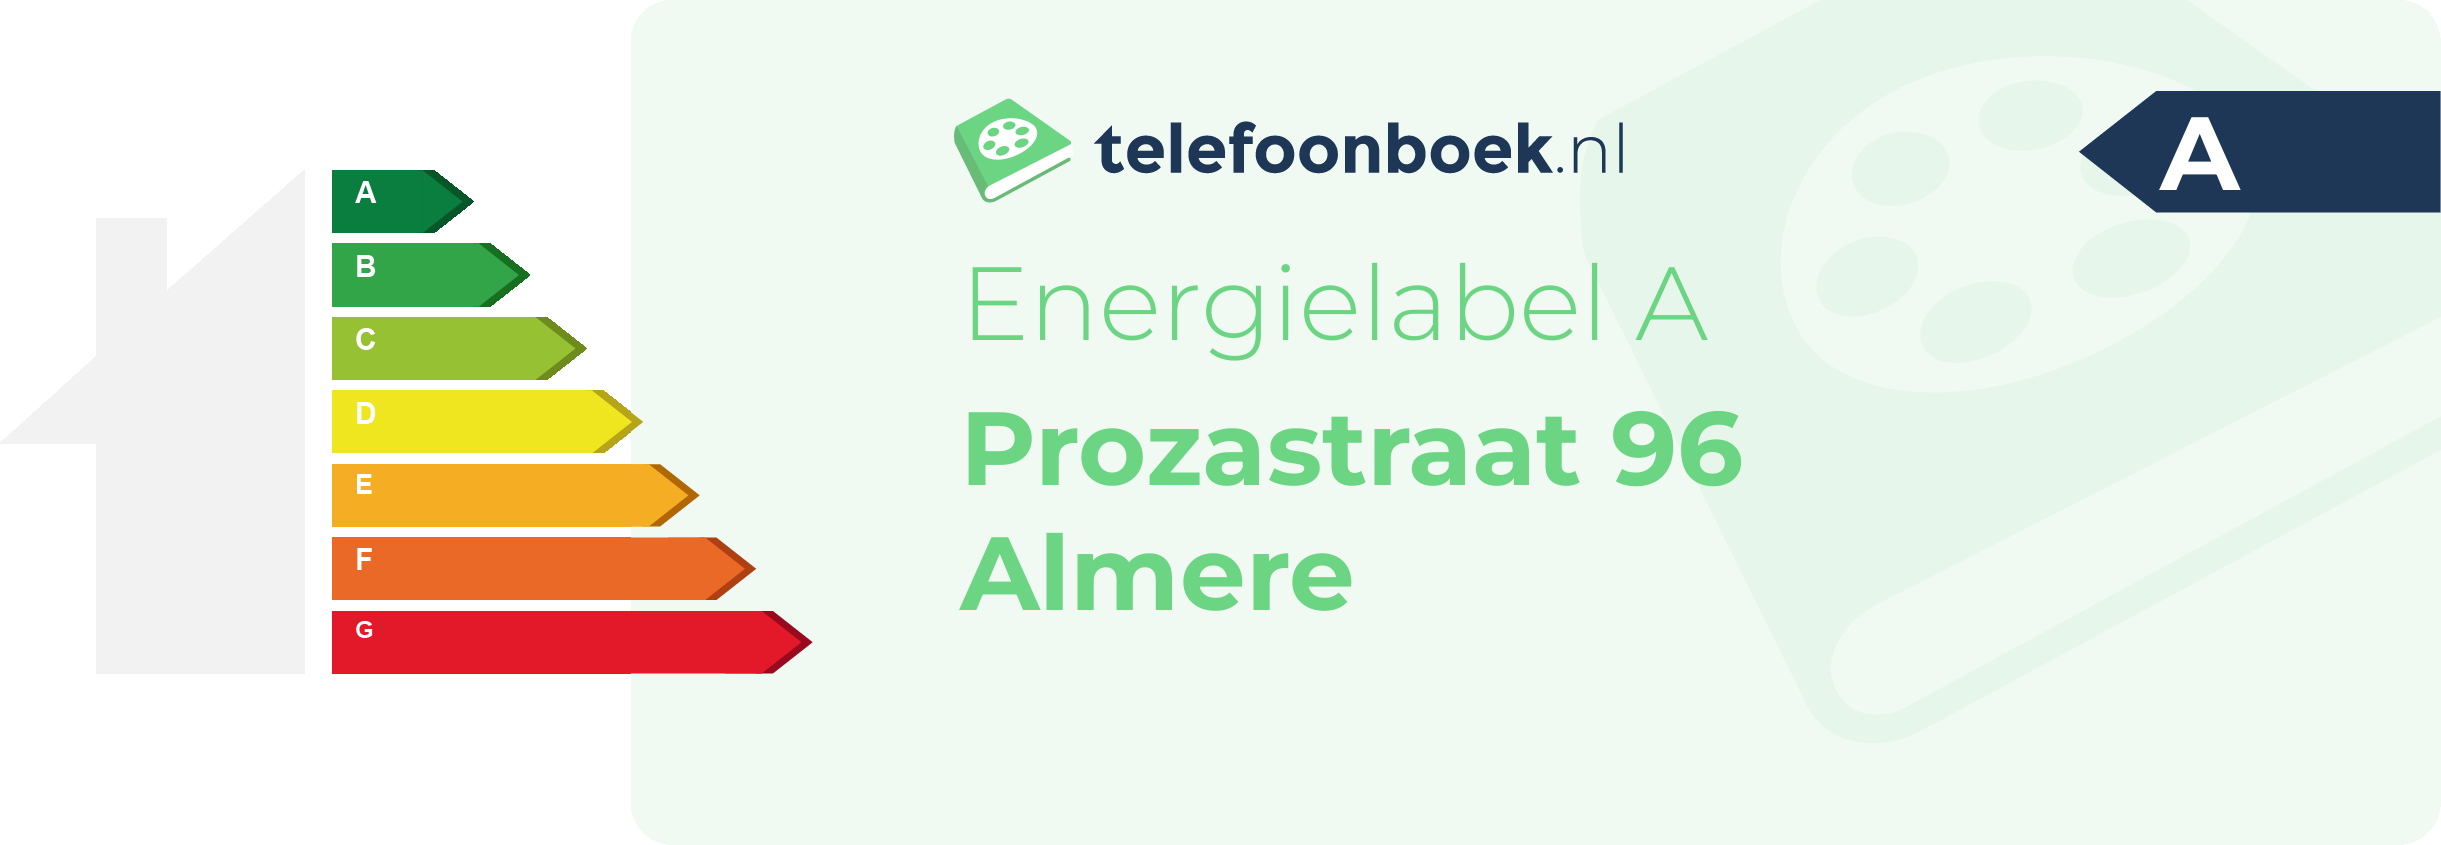 Energielabel Prozastraat 96 Almere